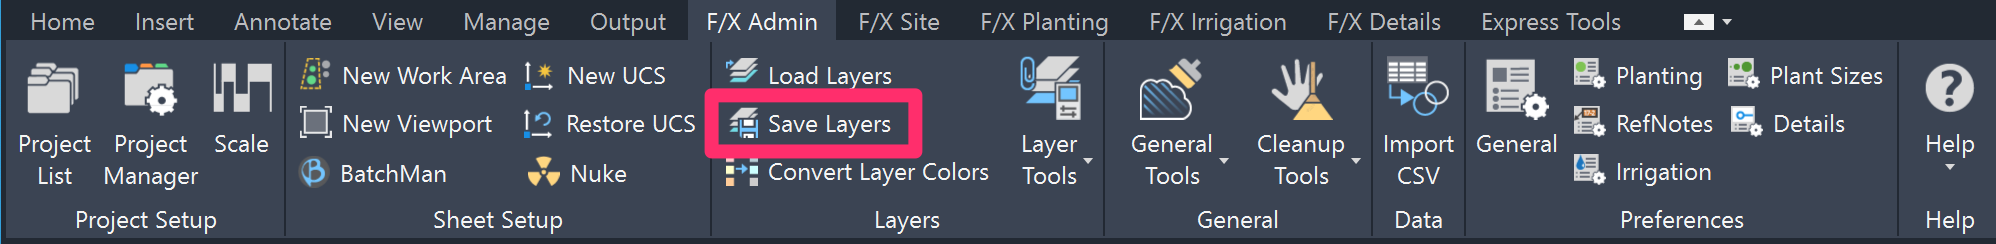 F/X Admin ribbon, Save Layers button